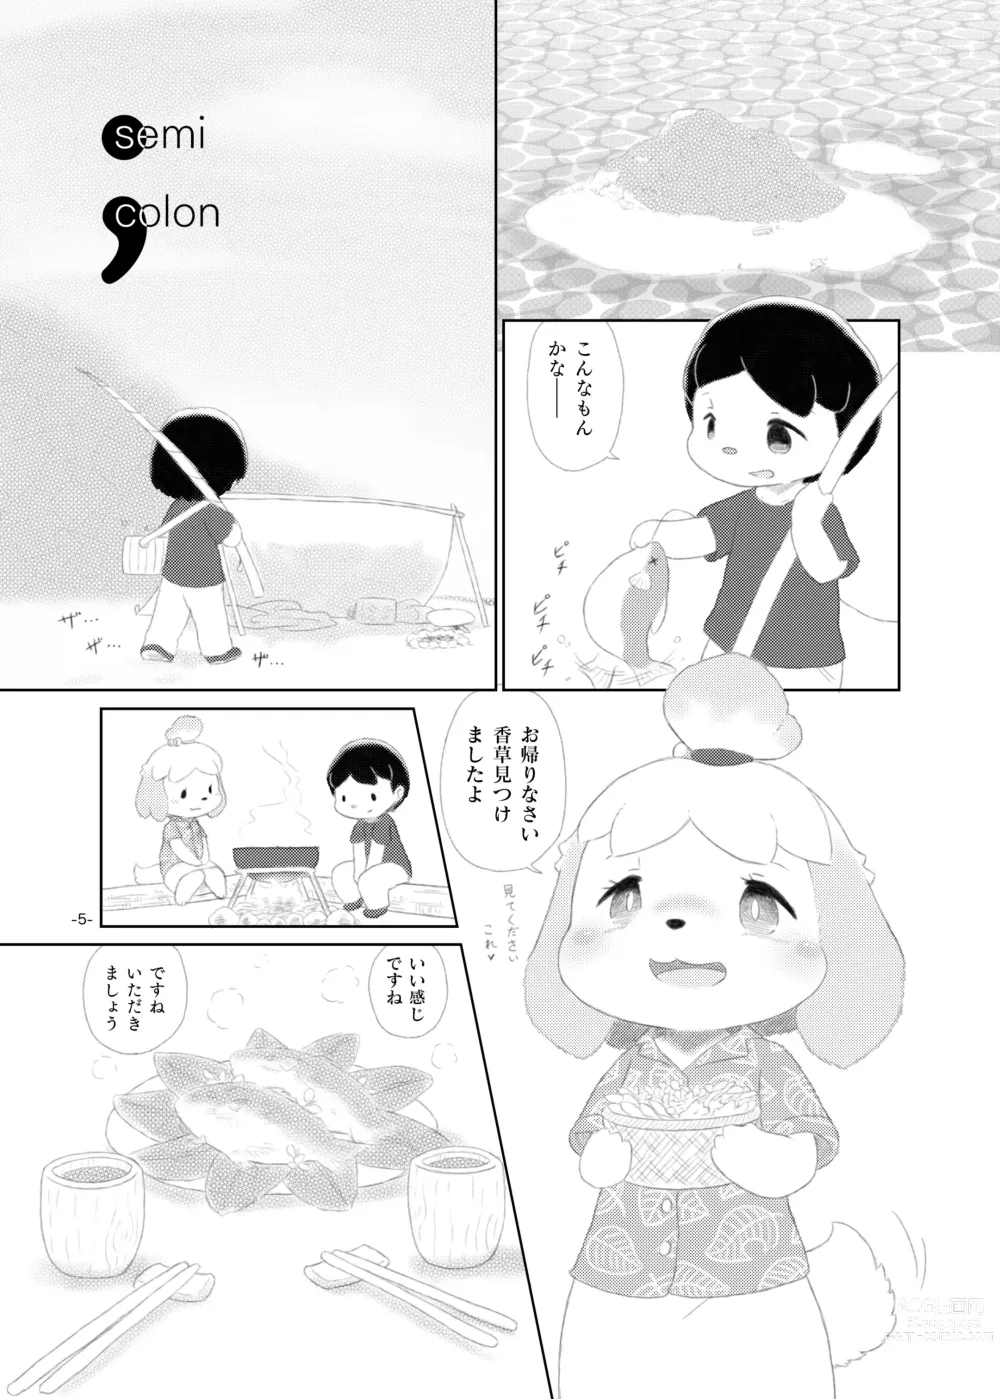 Page 4 of doujinshi semi colon